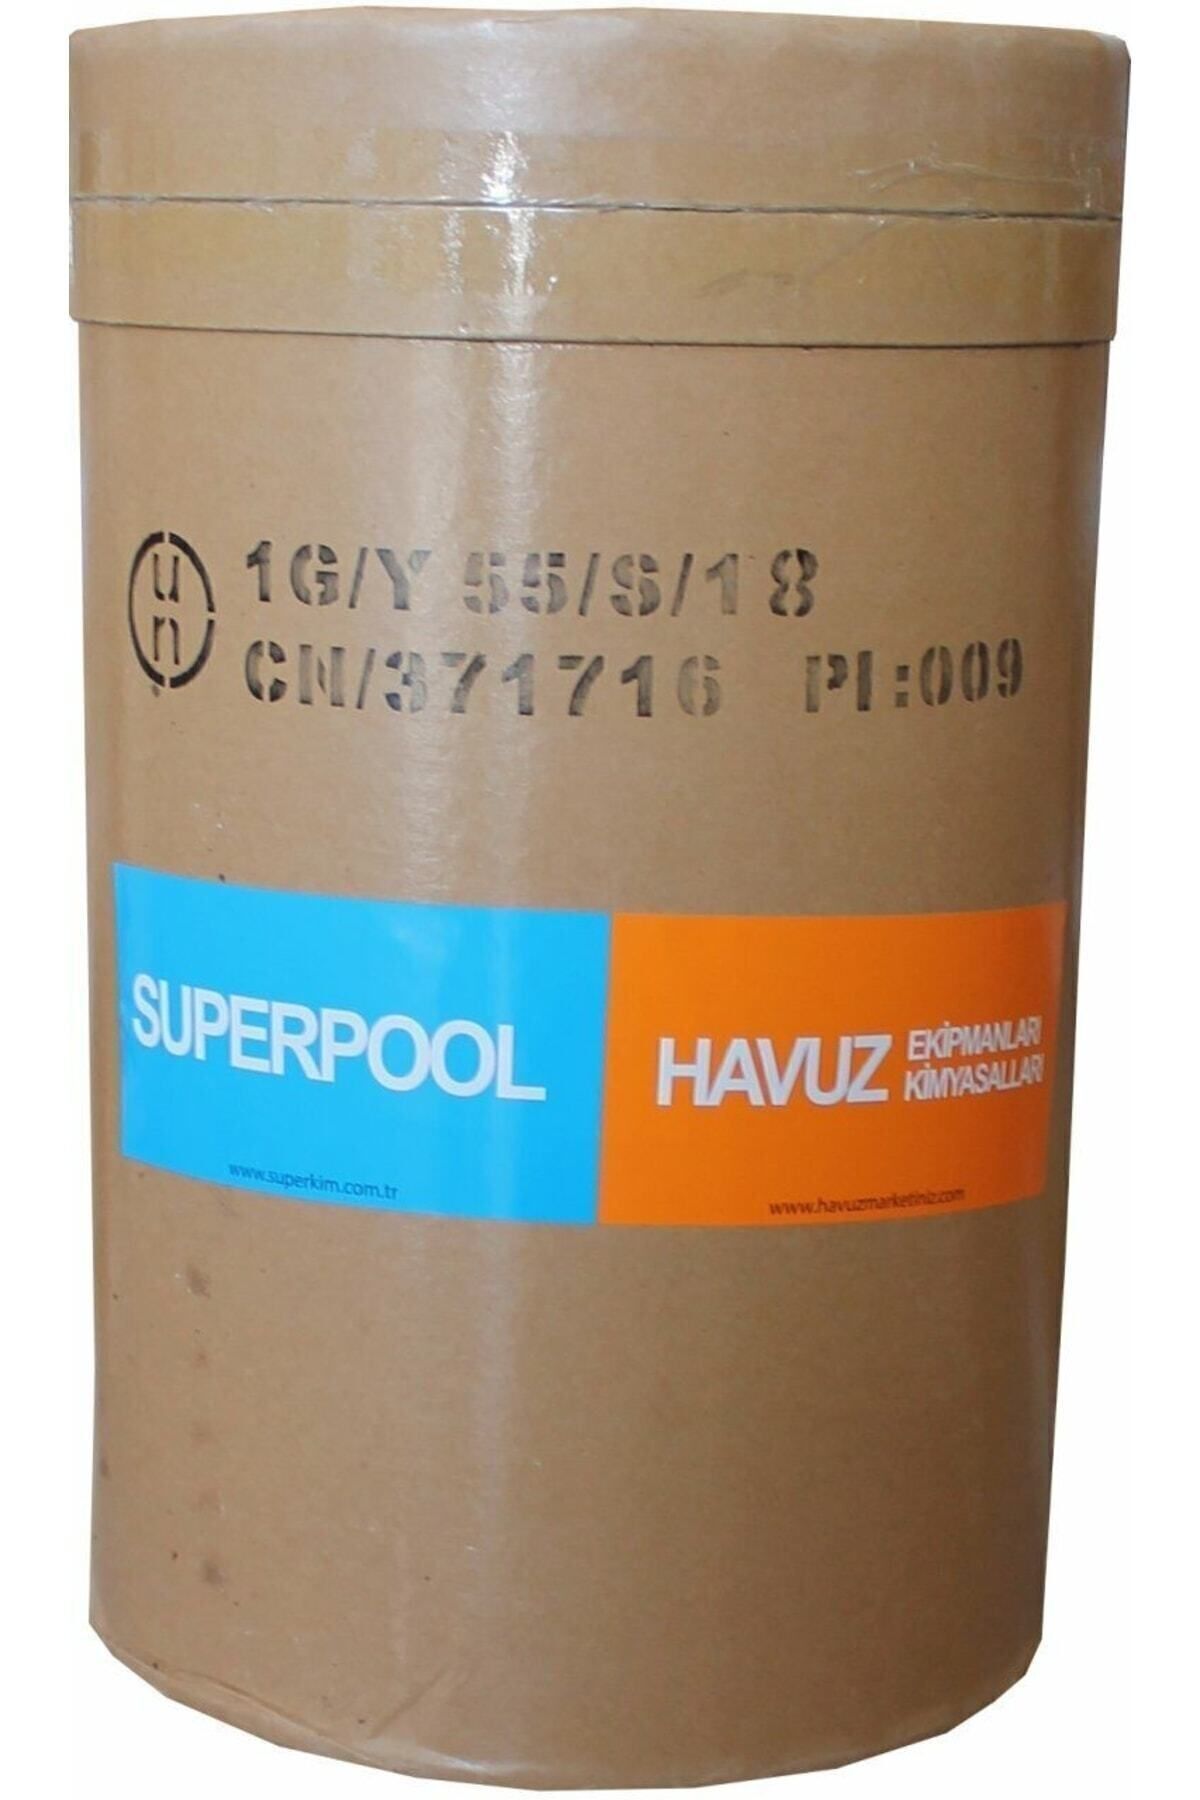 SPP SUPERPOOL Superchlor 90 Toz Klor 90 GR 50 KG Havuz Kimyasalı